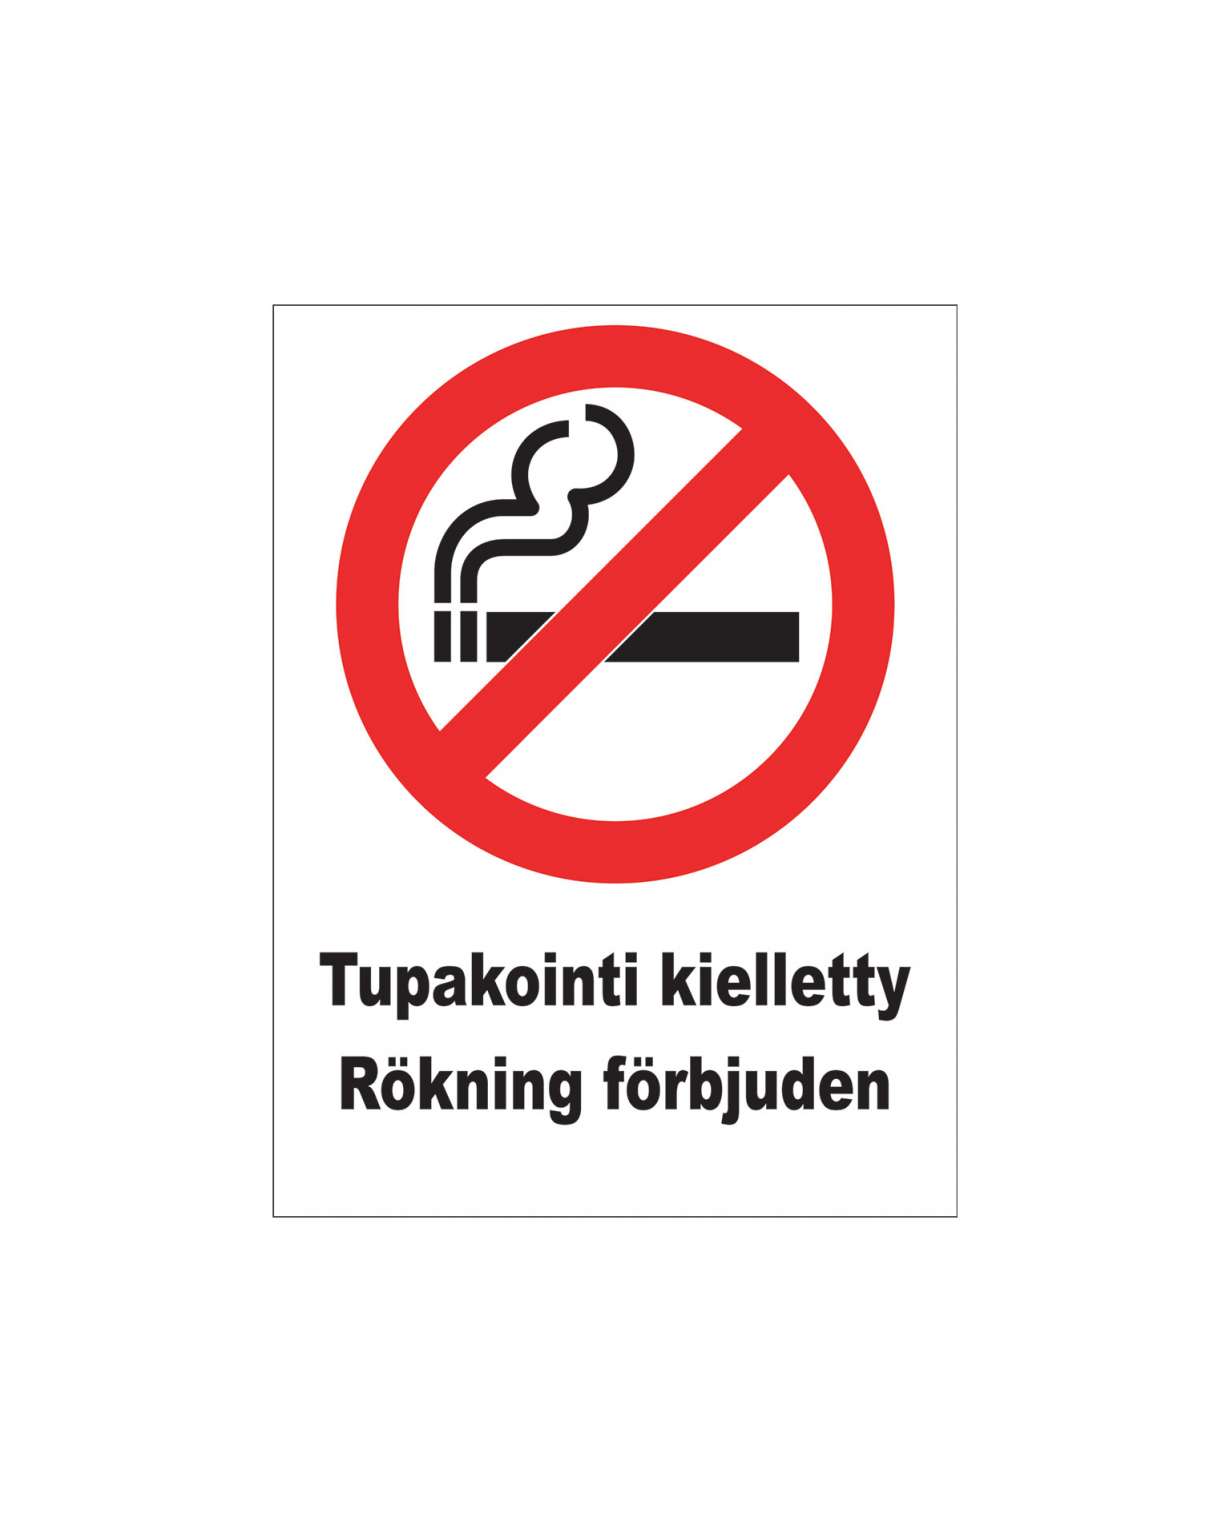 Tupakointi kielletty ruotsi, Ibond alumiini, 200x300 mm